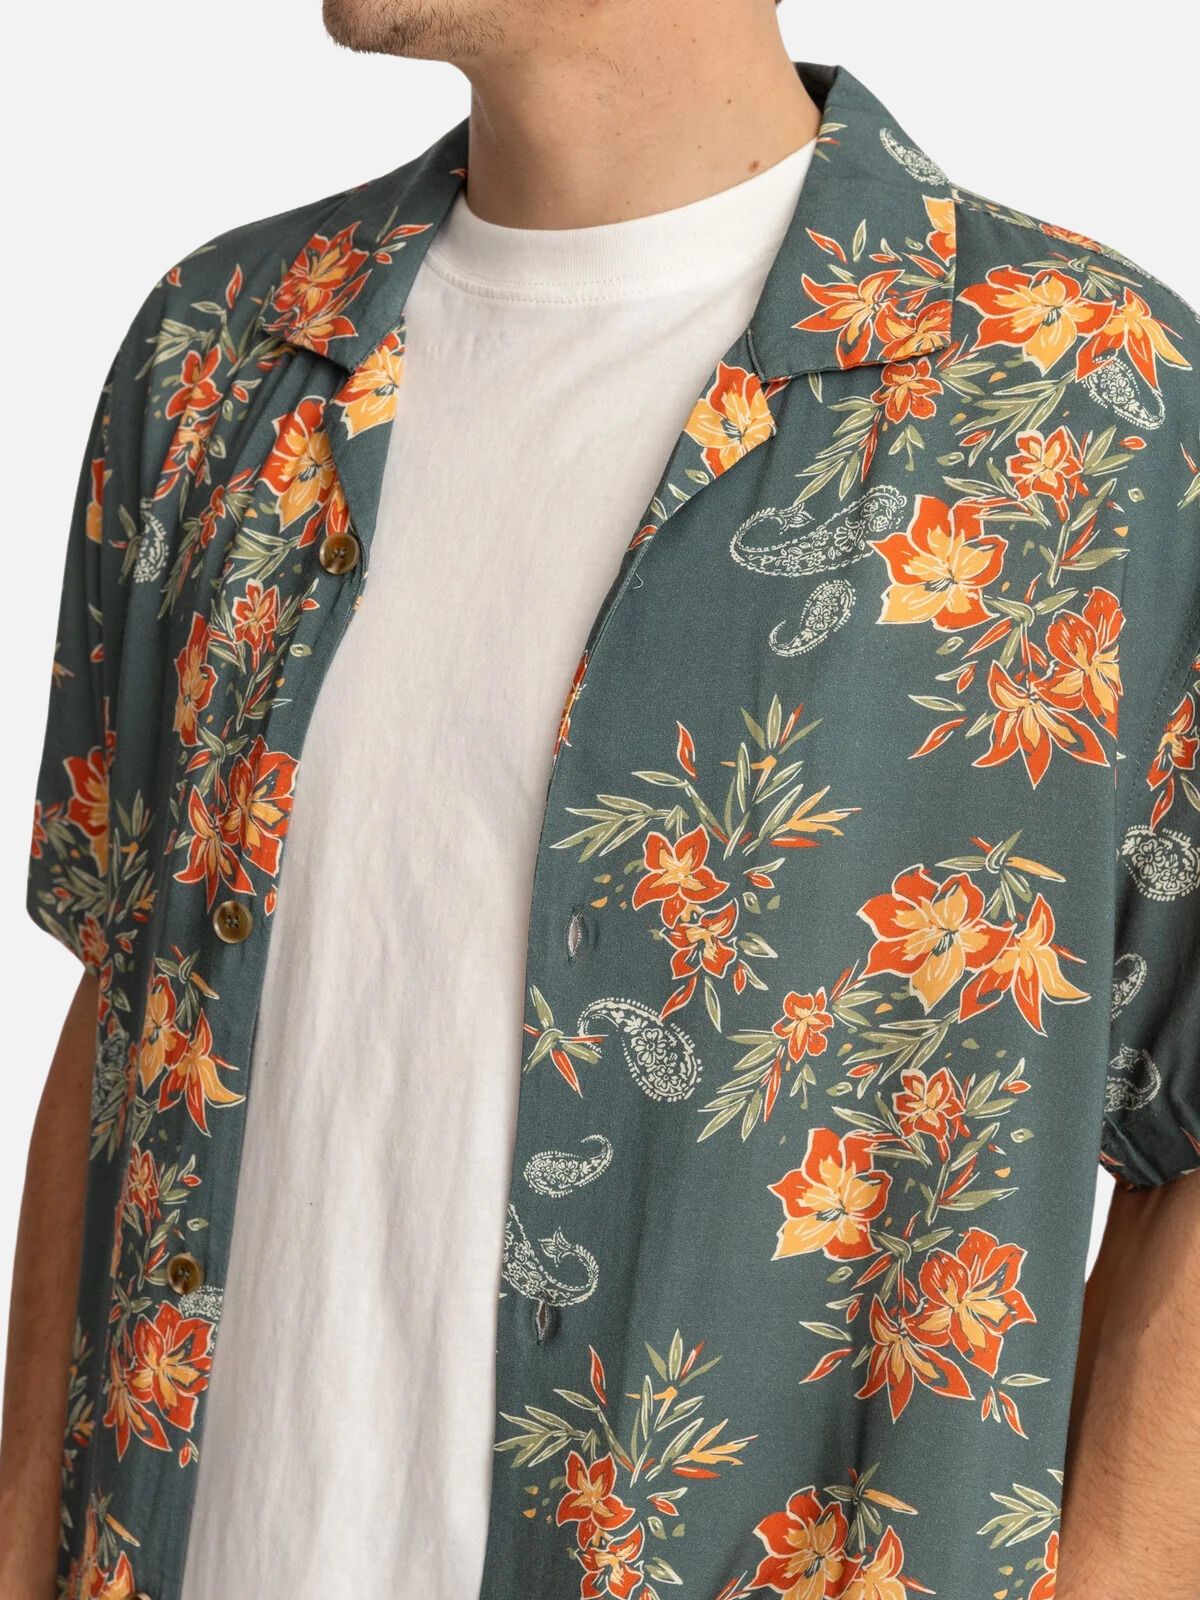 rhythm tropical paisley cuban ss short sleeve collared shirt 100% rayon pine green oran yellow floral design kempt athens ga georgia men's clothing store\